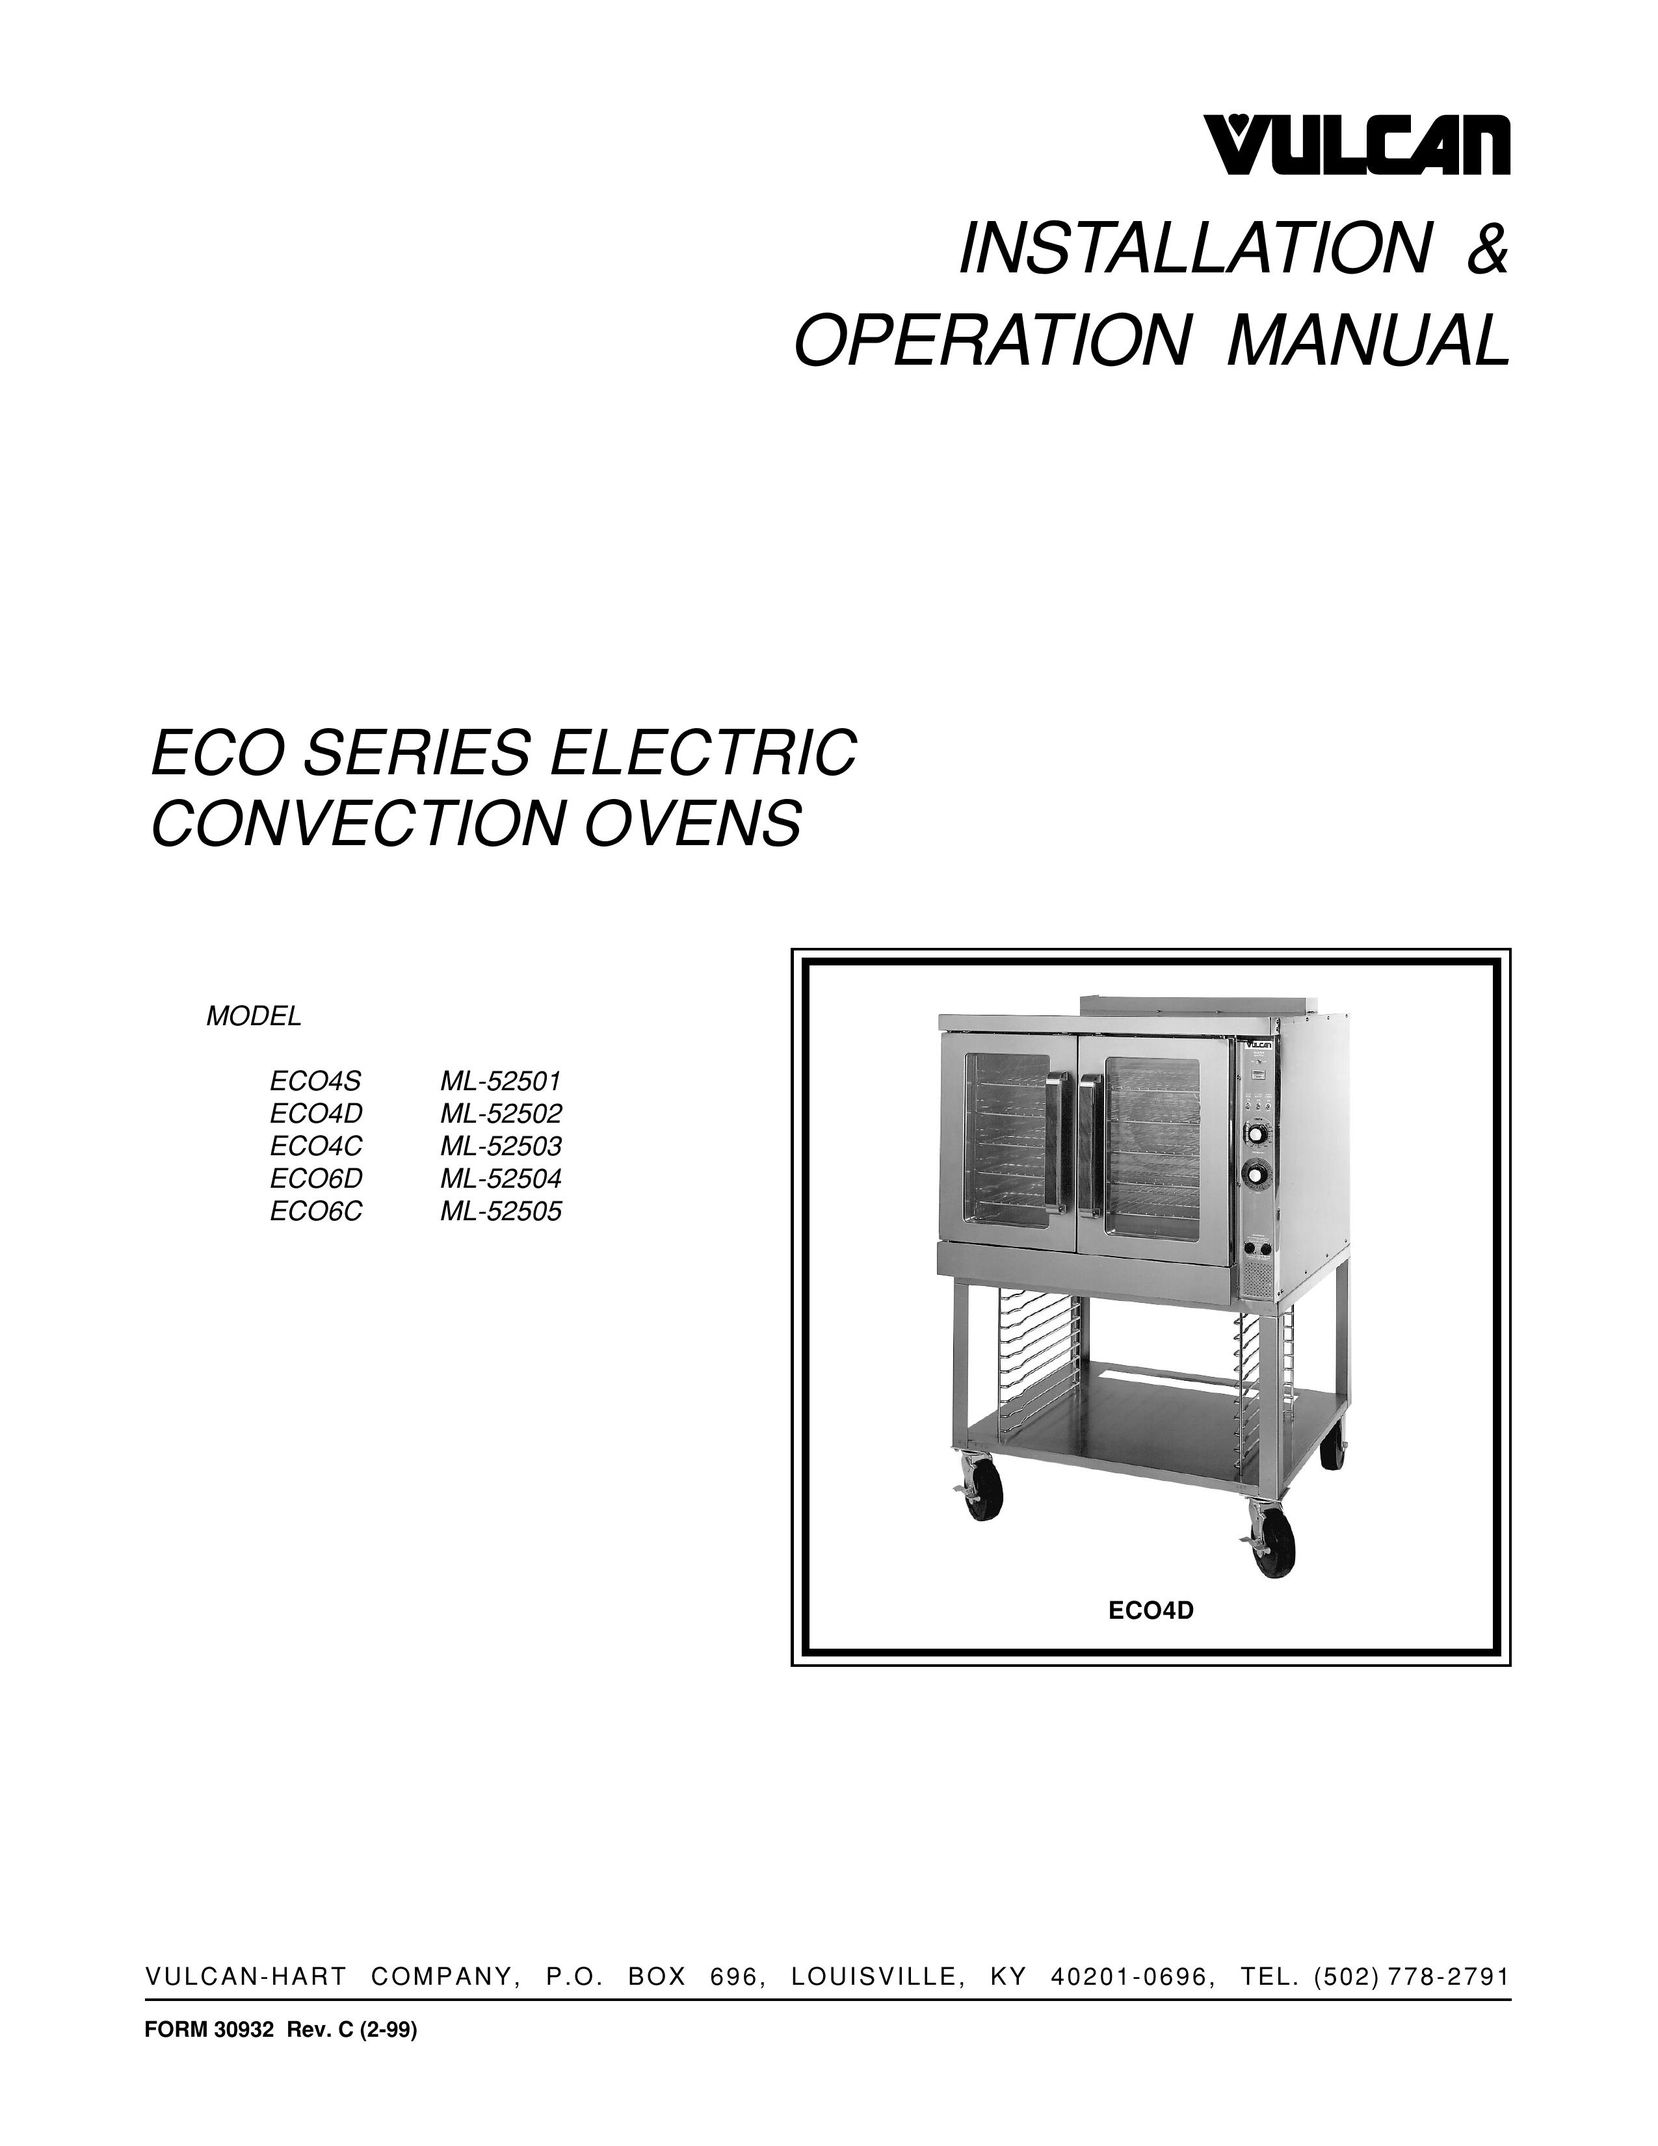 Vulcan-Hart ECO4D ML-52502 Convection Oven User Manual